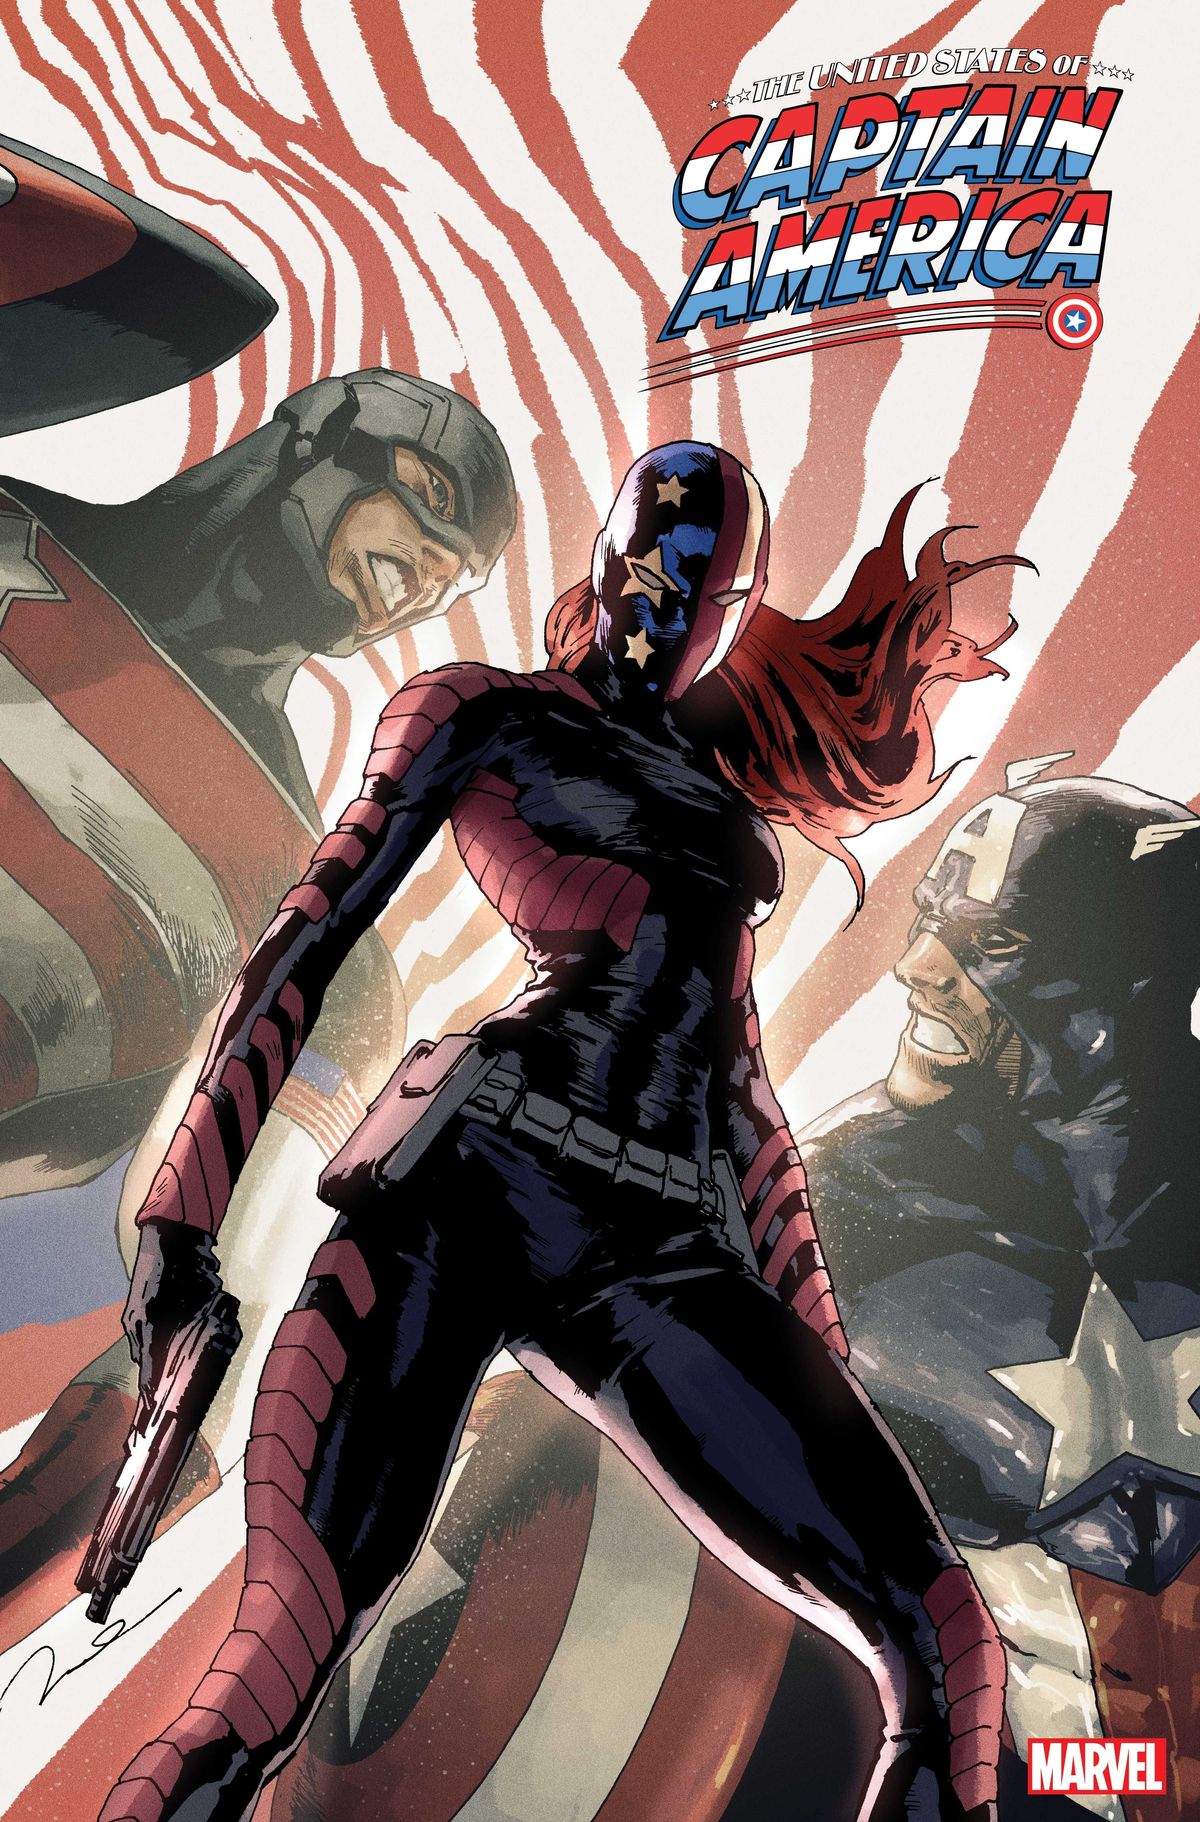 Captain America Terbaru Marvel Adalah Wanita Filipina-Amerika Usia Perguruan Tinggi